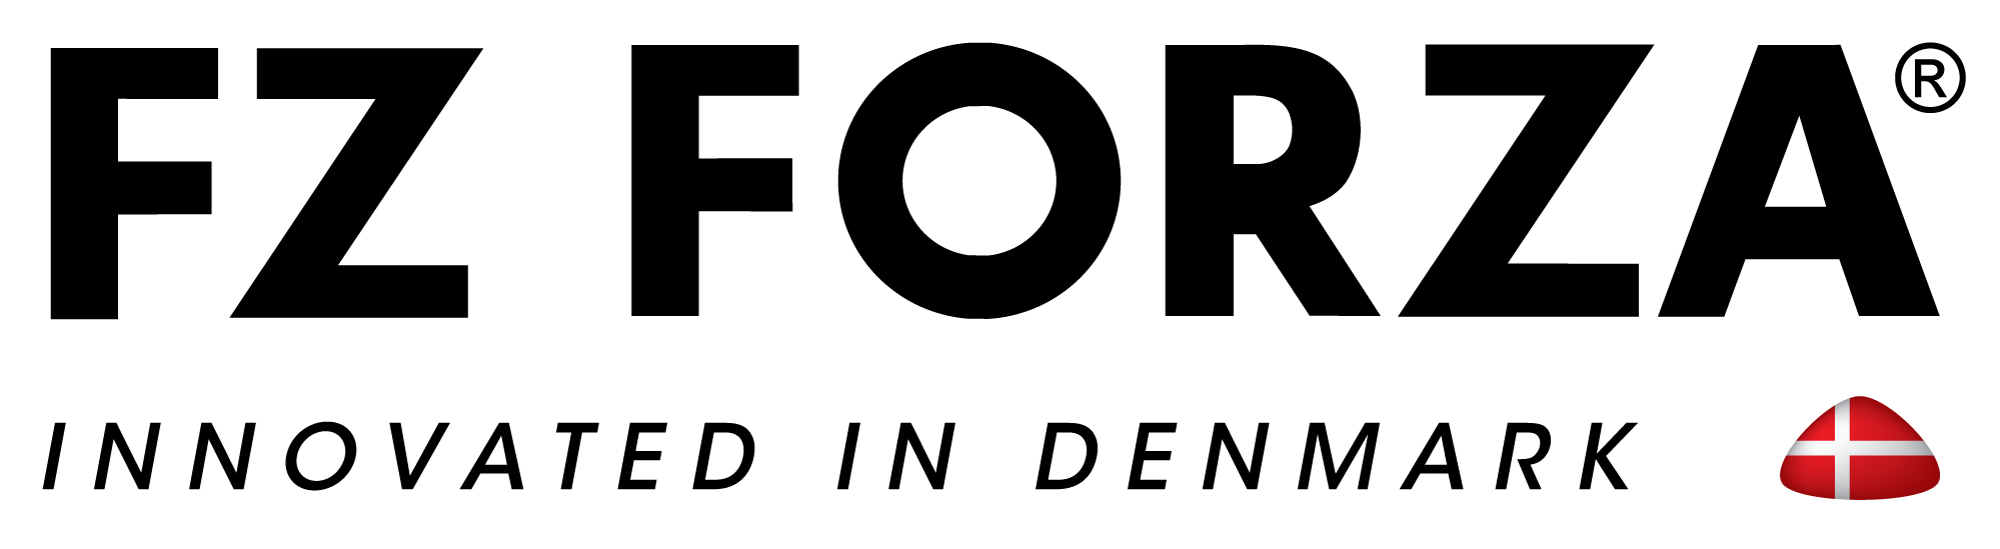 FZ-FORZA-logo-black.png